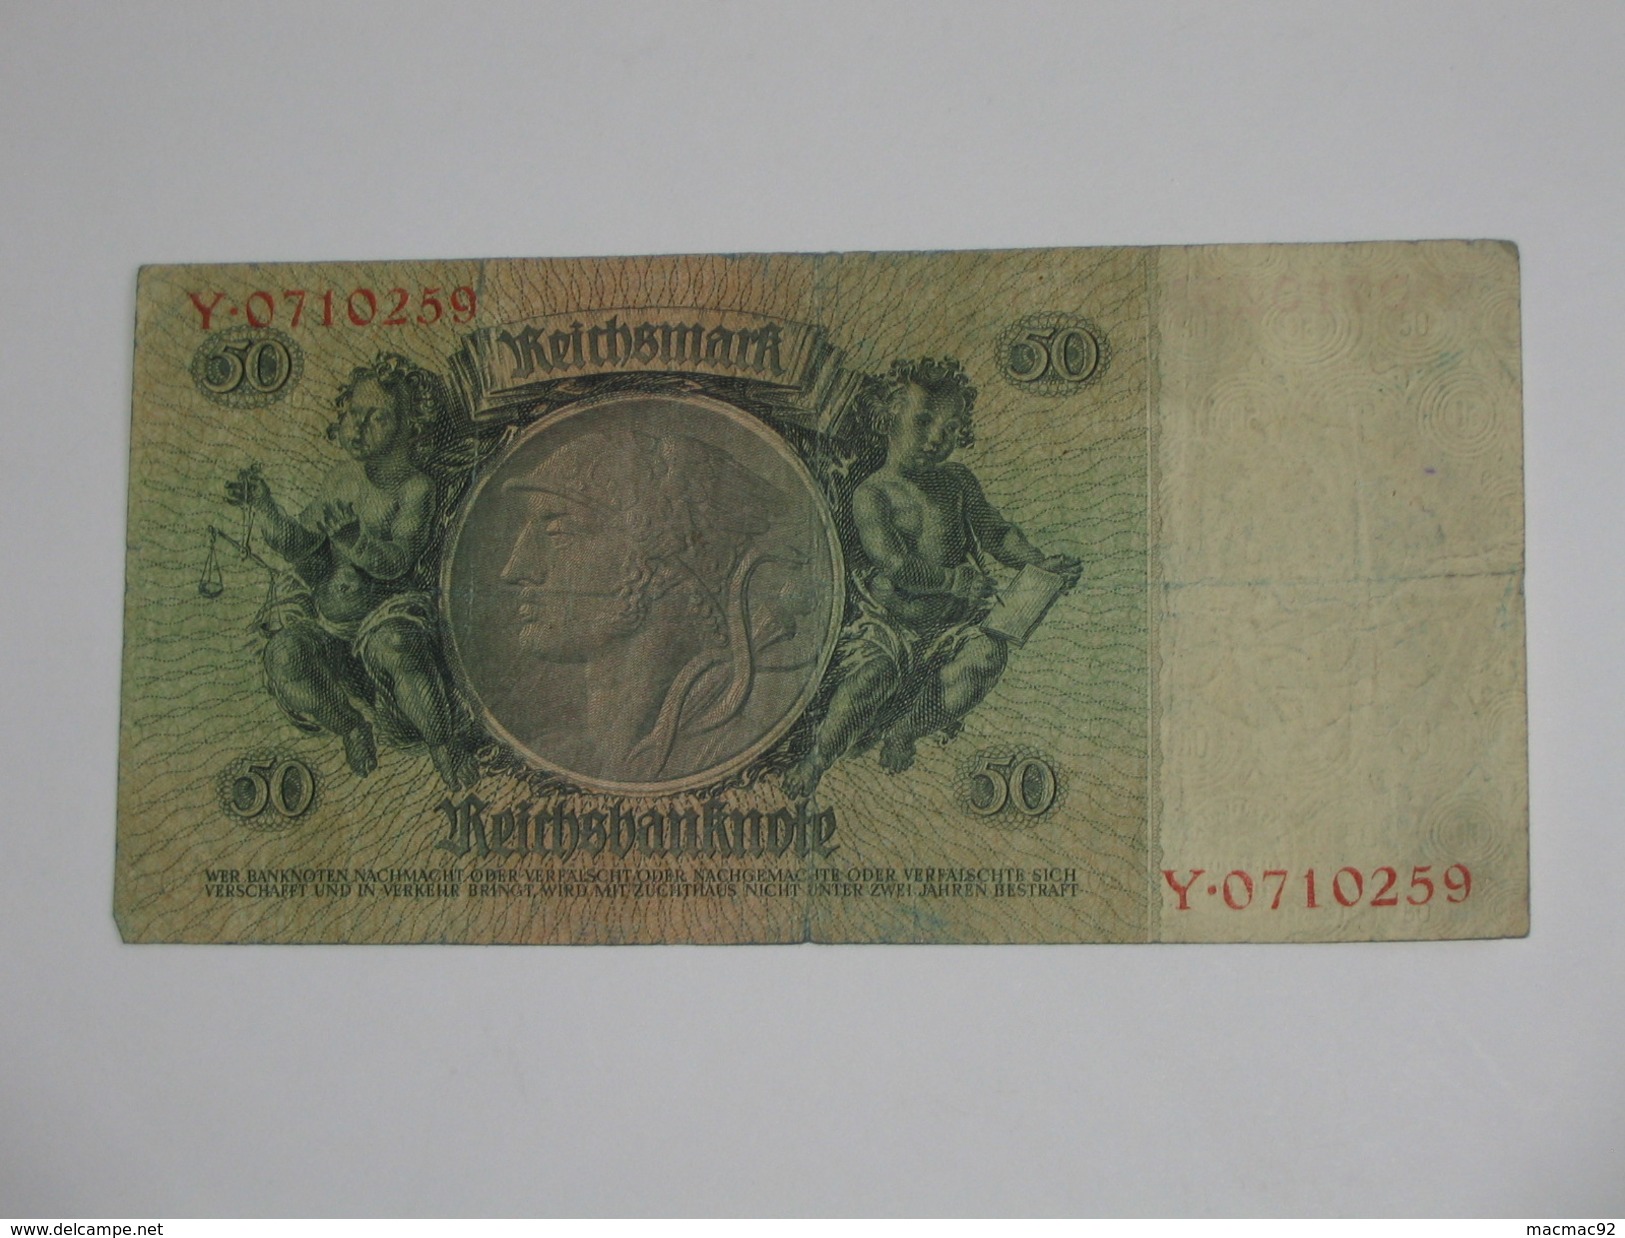 50 Funfzig  Reichsmark - Berlin  1933 - Reichsbanknote - Germany **** EN ACHAT IMMEDIAT **** - 50 Mark